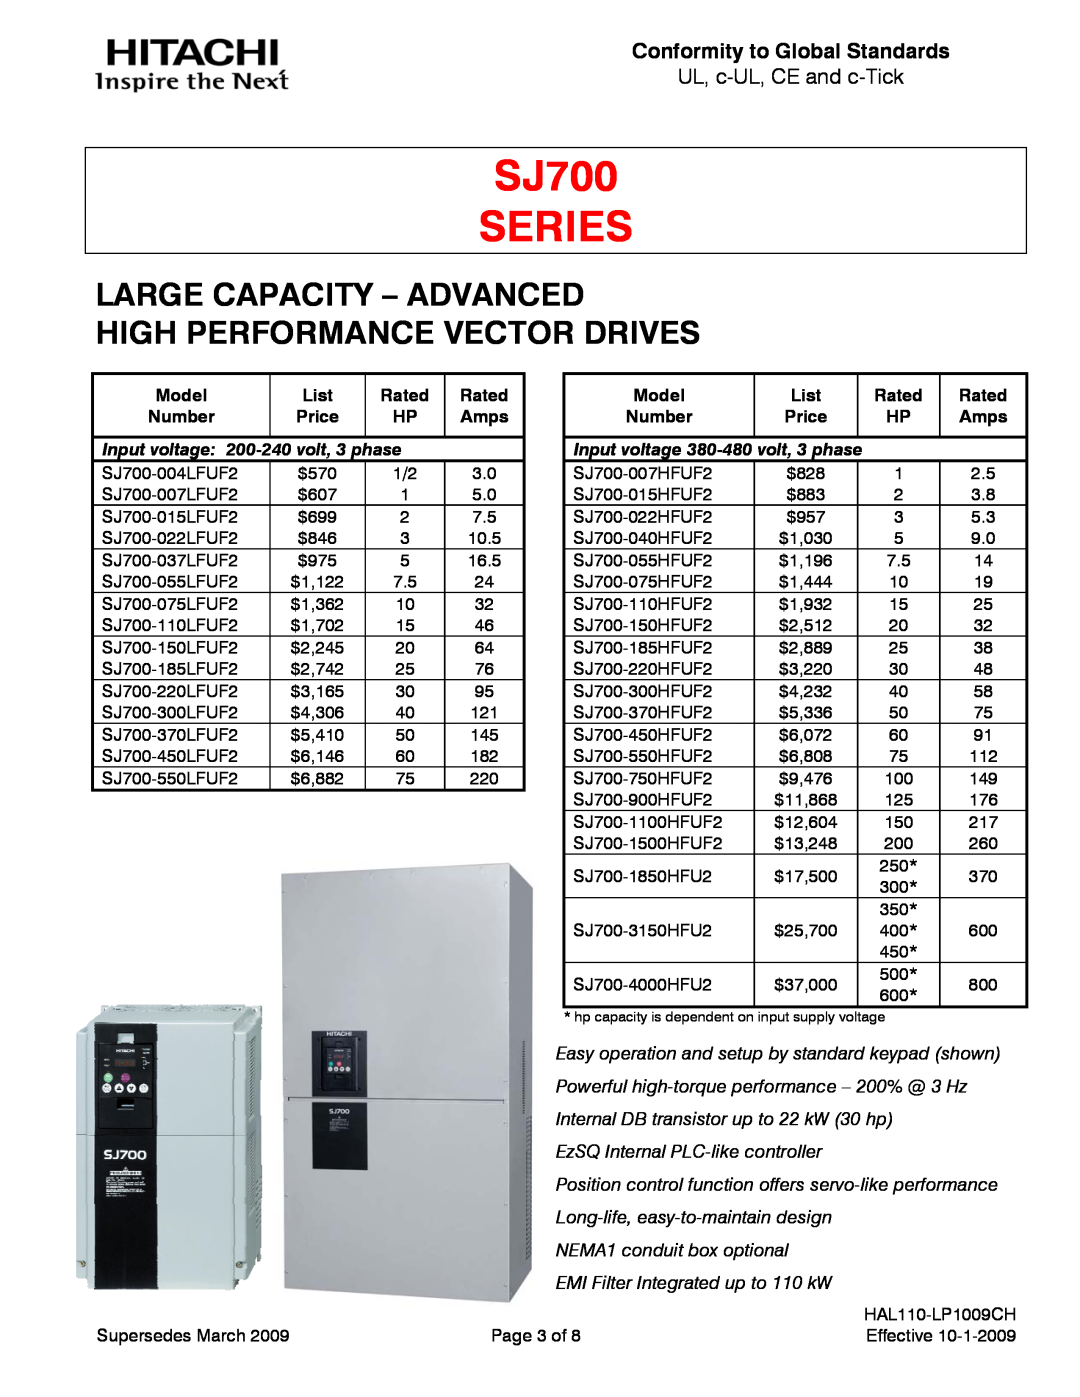 Hitachi sj200 manual SJ700 SERIES, Large Capacity - Advanced High Performance Vector Drives, Conformity to Global Standards 